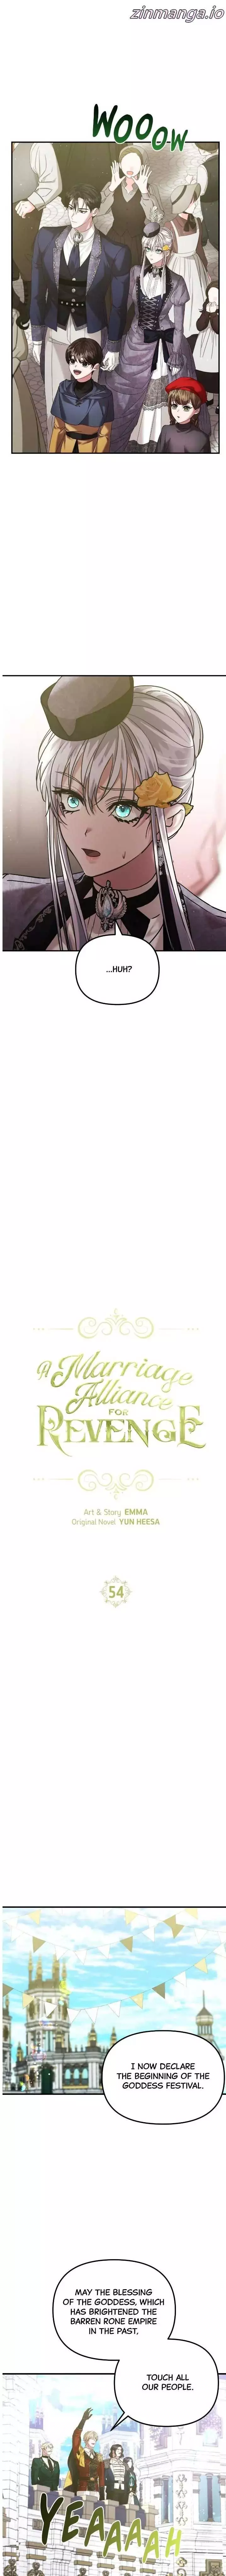 Marriage Alliance For Revenge - 54 page 6-c6b2d81e